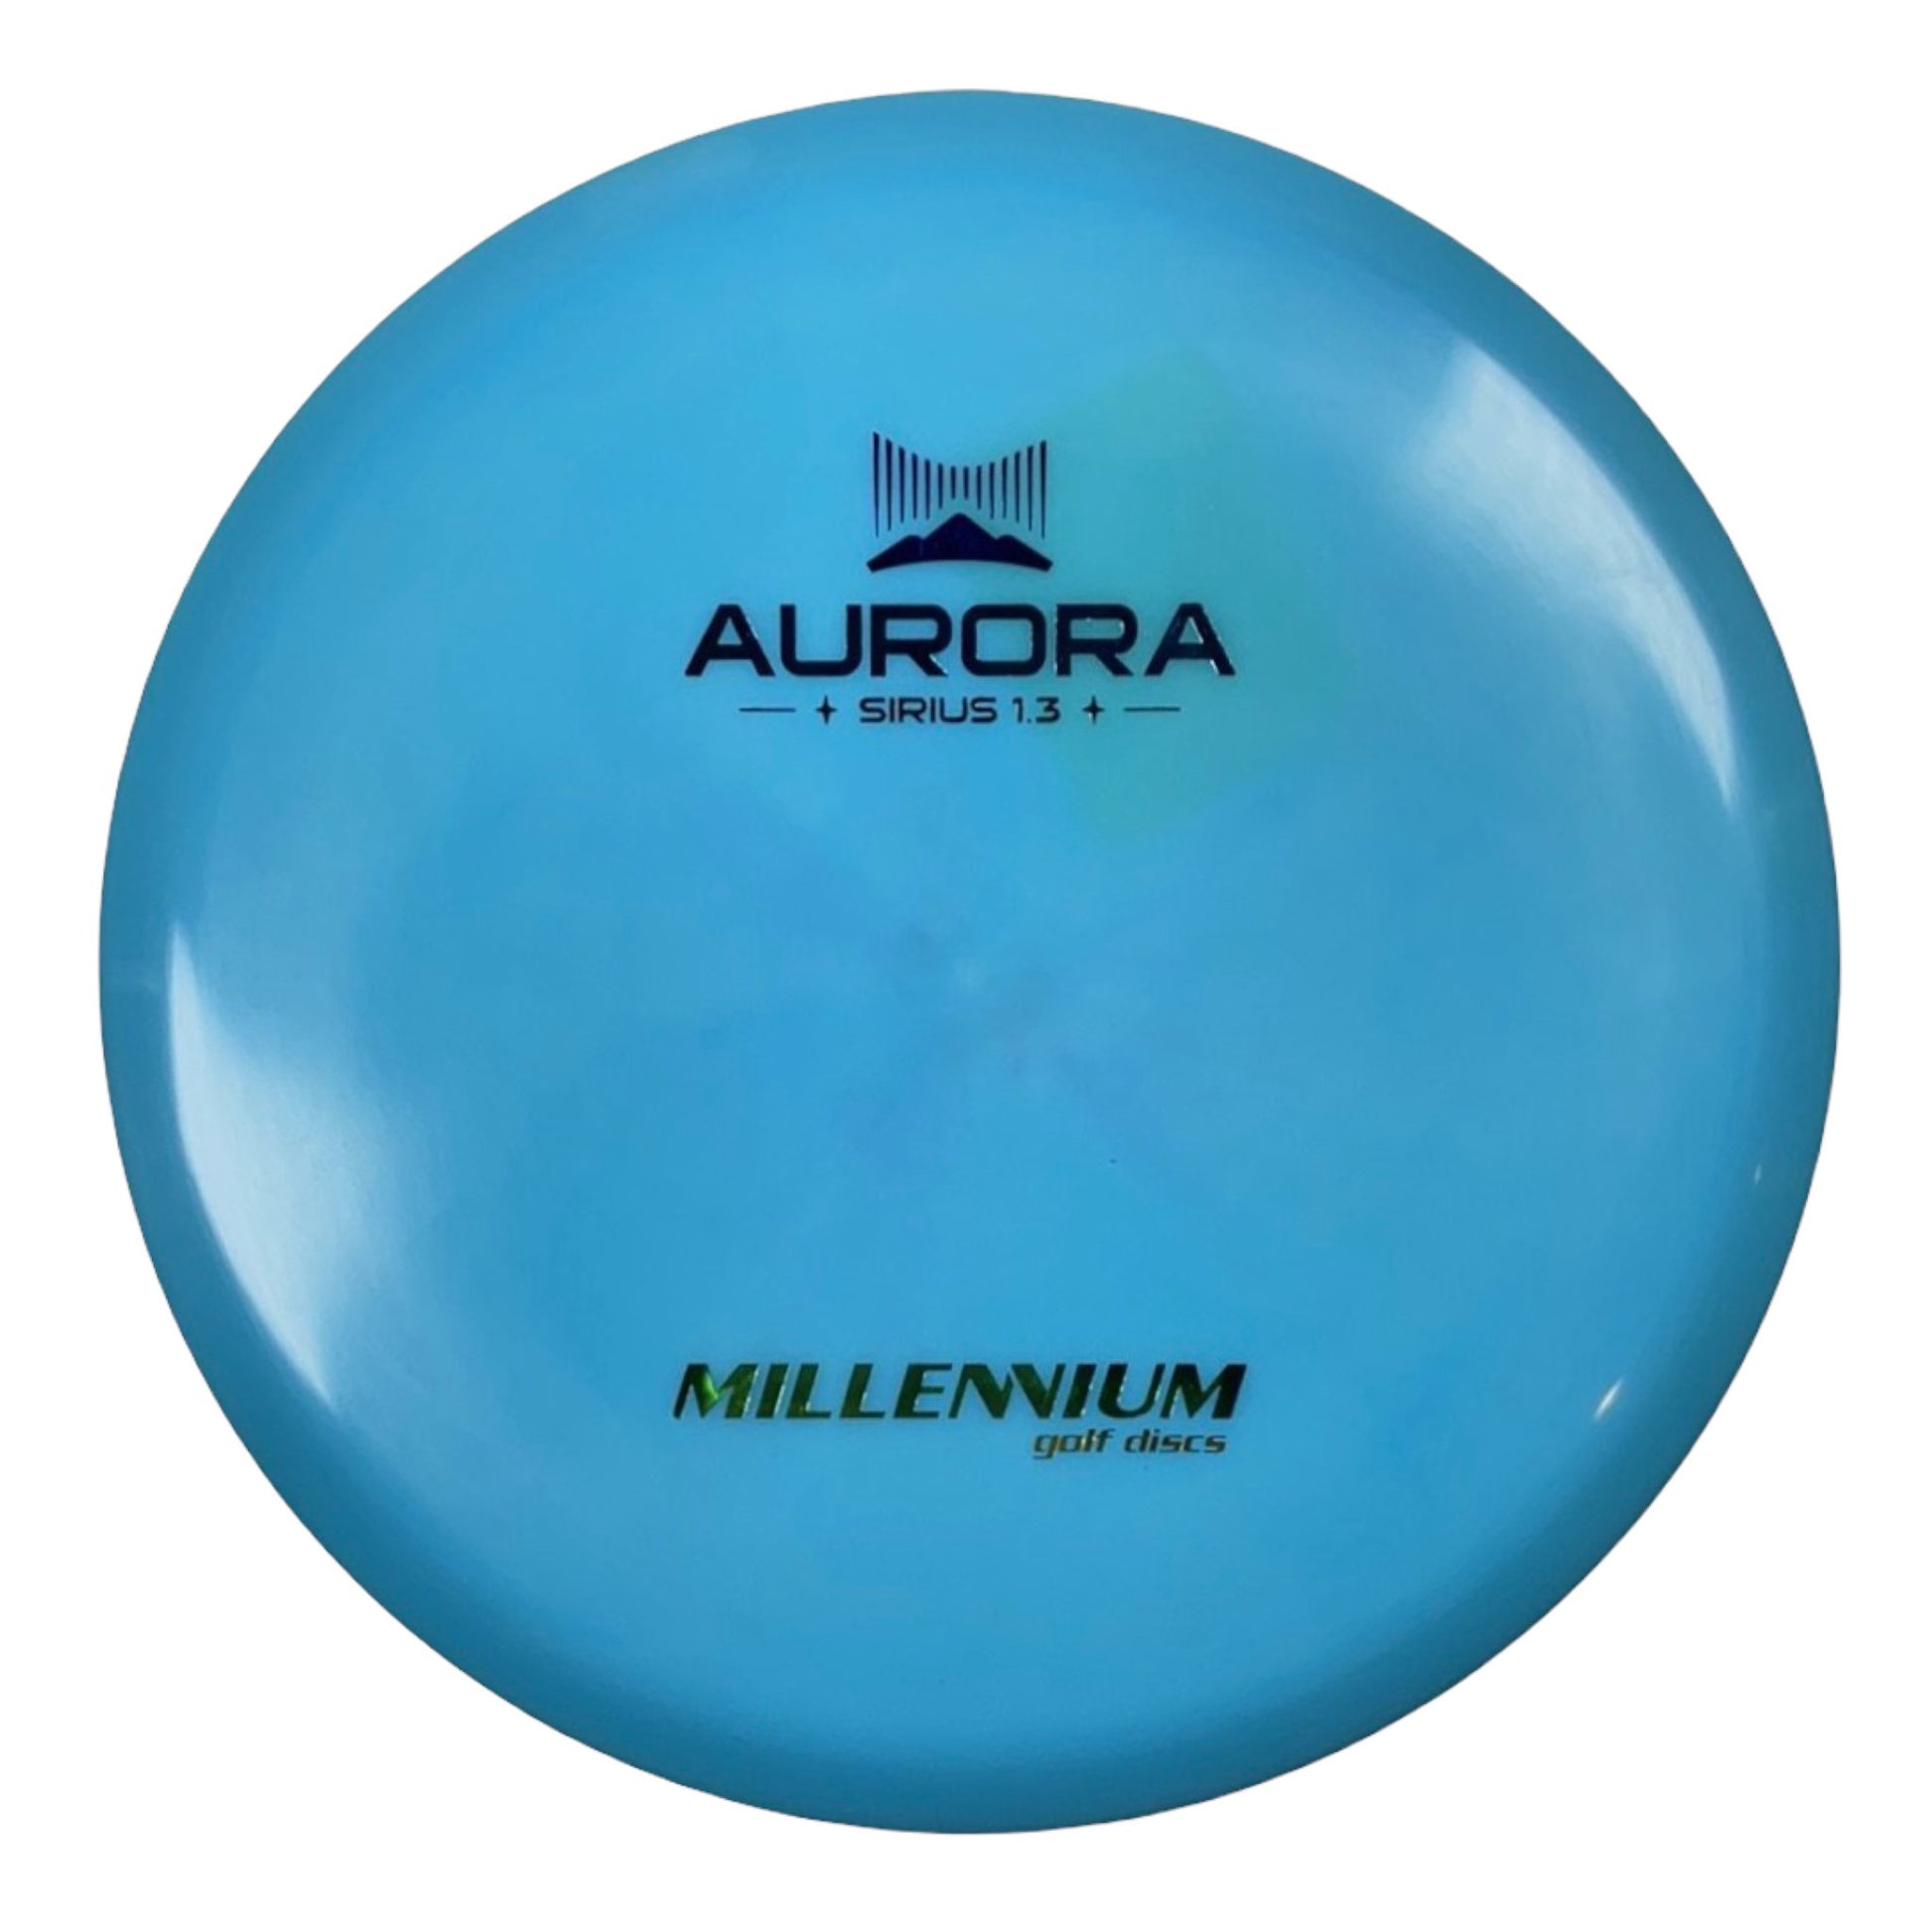 Millennium Golf Discs Aurora MS | Sirius | Blue/Rainbow 171g Disc Golf